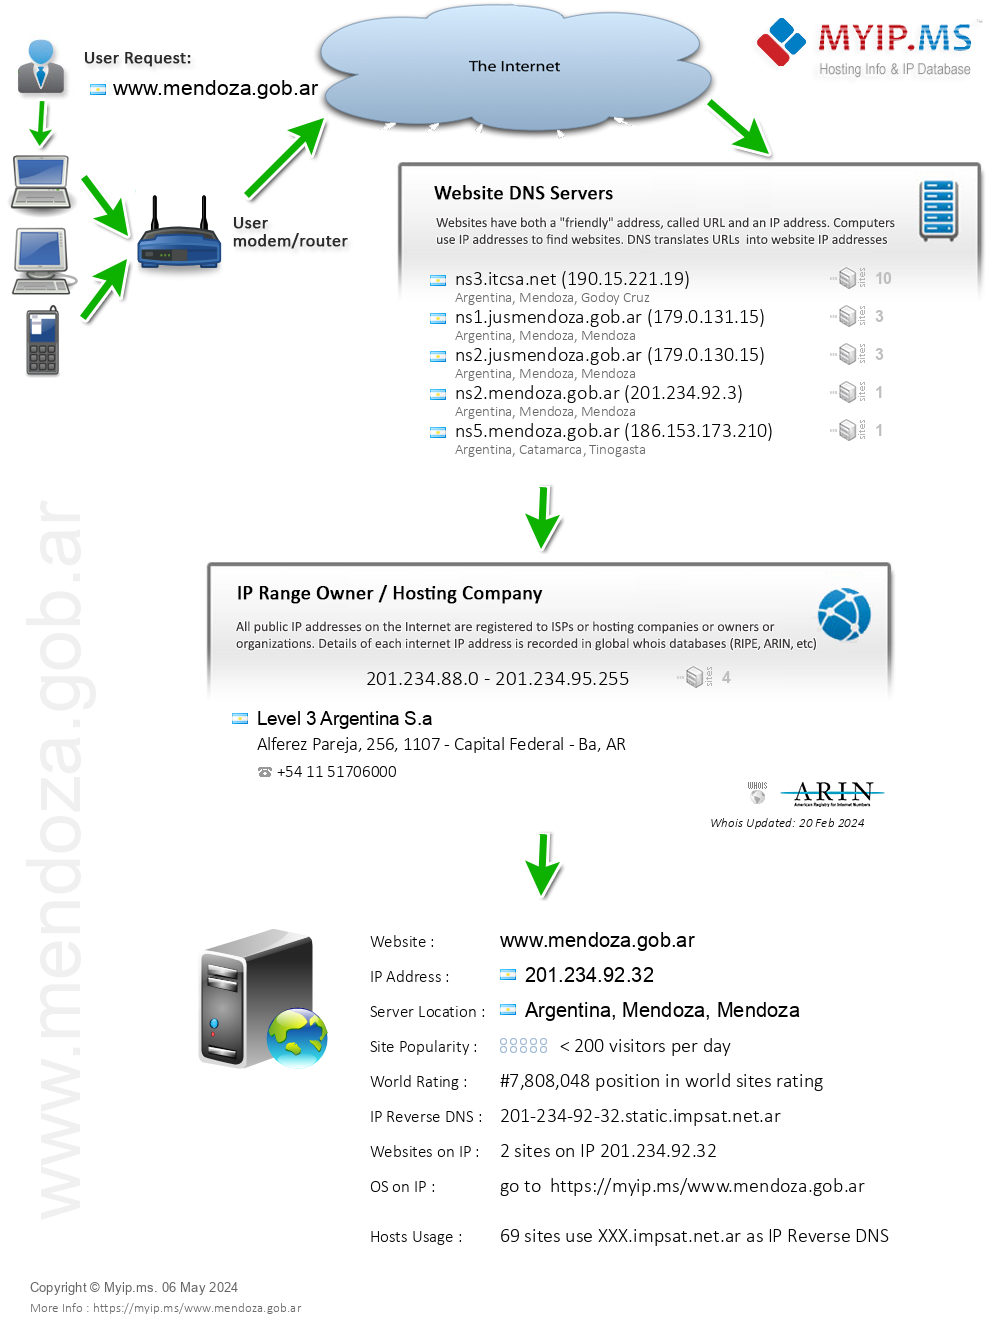 Mendoza.gob.ar - Website Hosting Visual IP Diagram